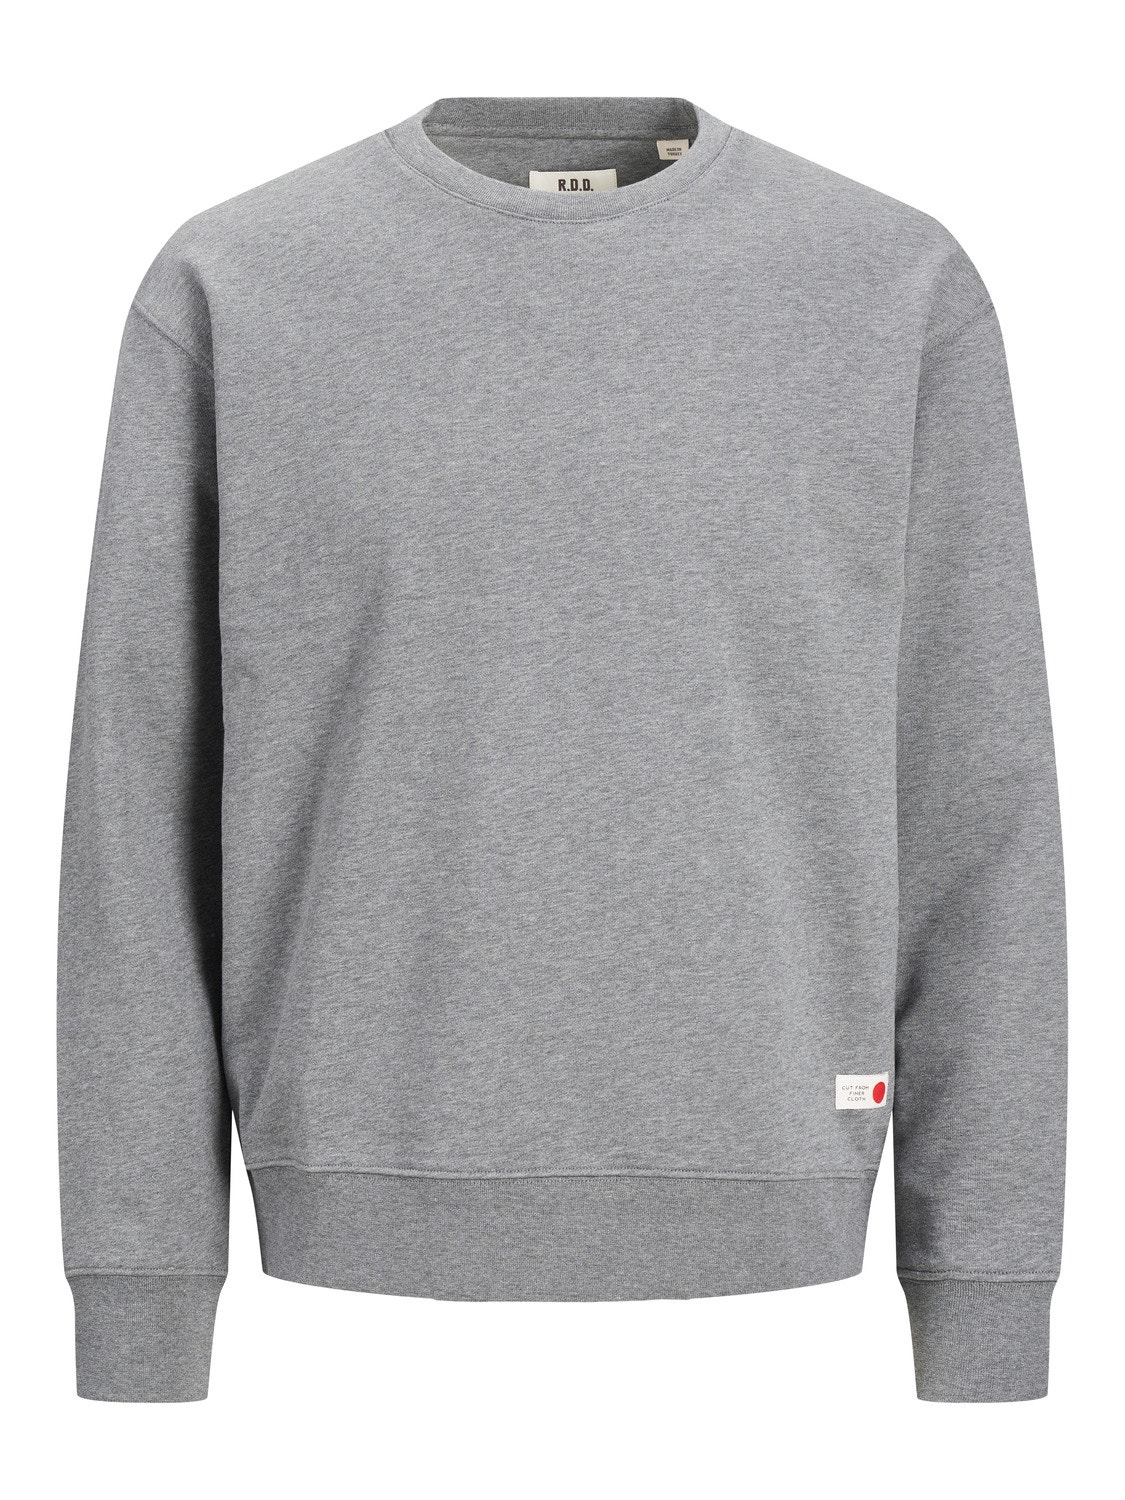 Jack & Jones RDD Plain Crewn Neck Sweatshirt -Light Grey Melange - 12218242